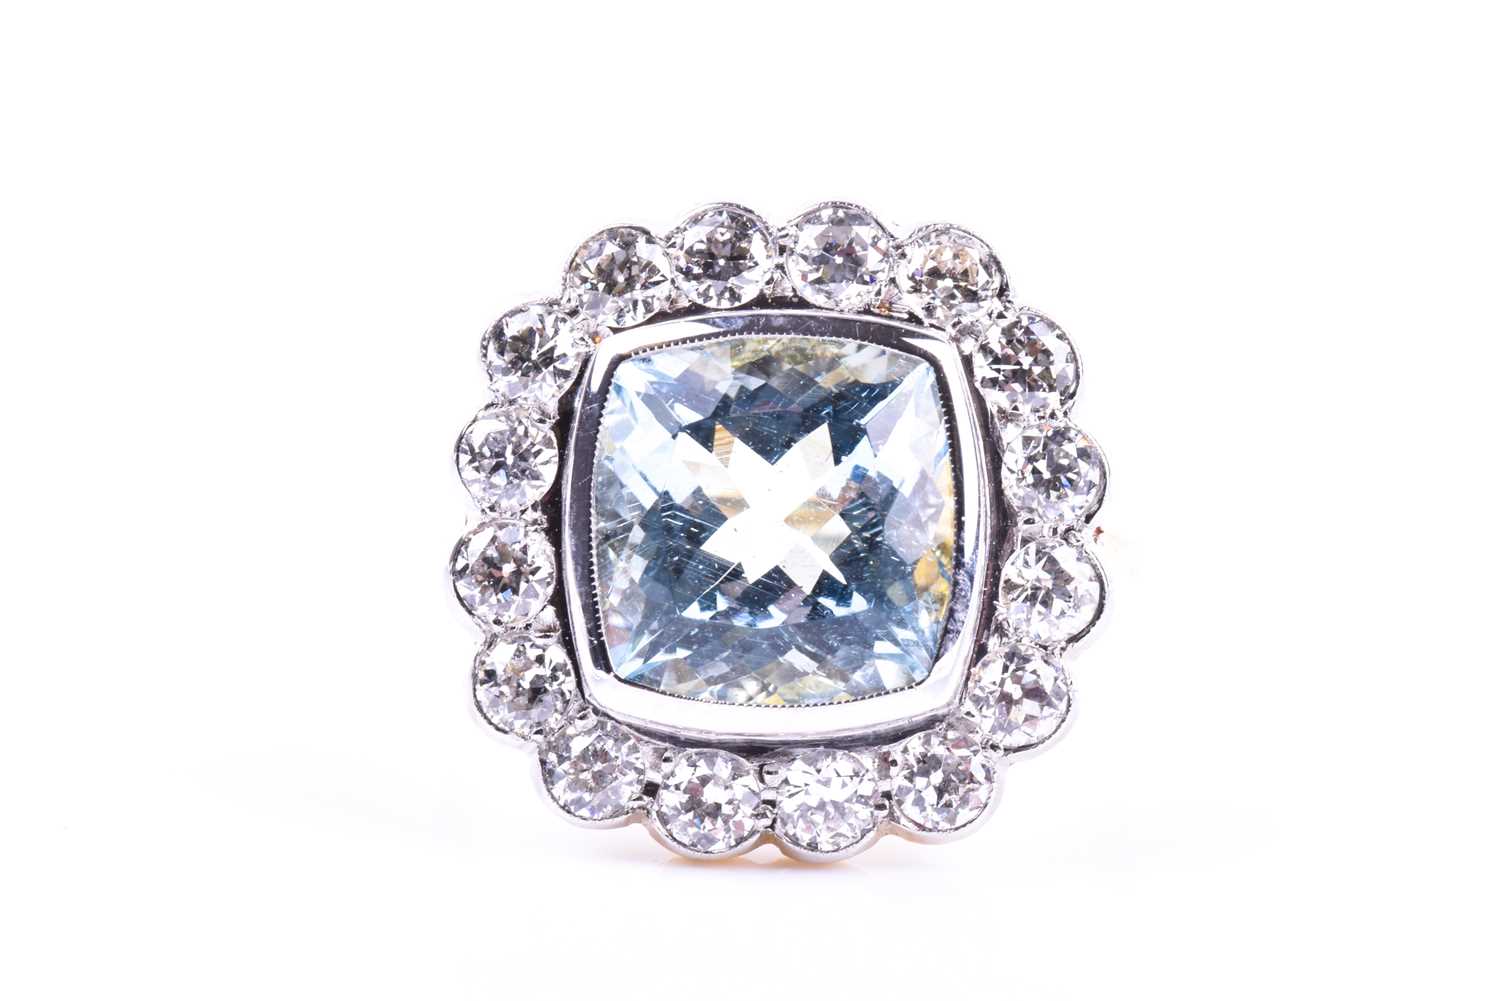 An 18ct yellow gold, diamond, and aquamarine ring, set with a mixed cushion-cut aquamarine of